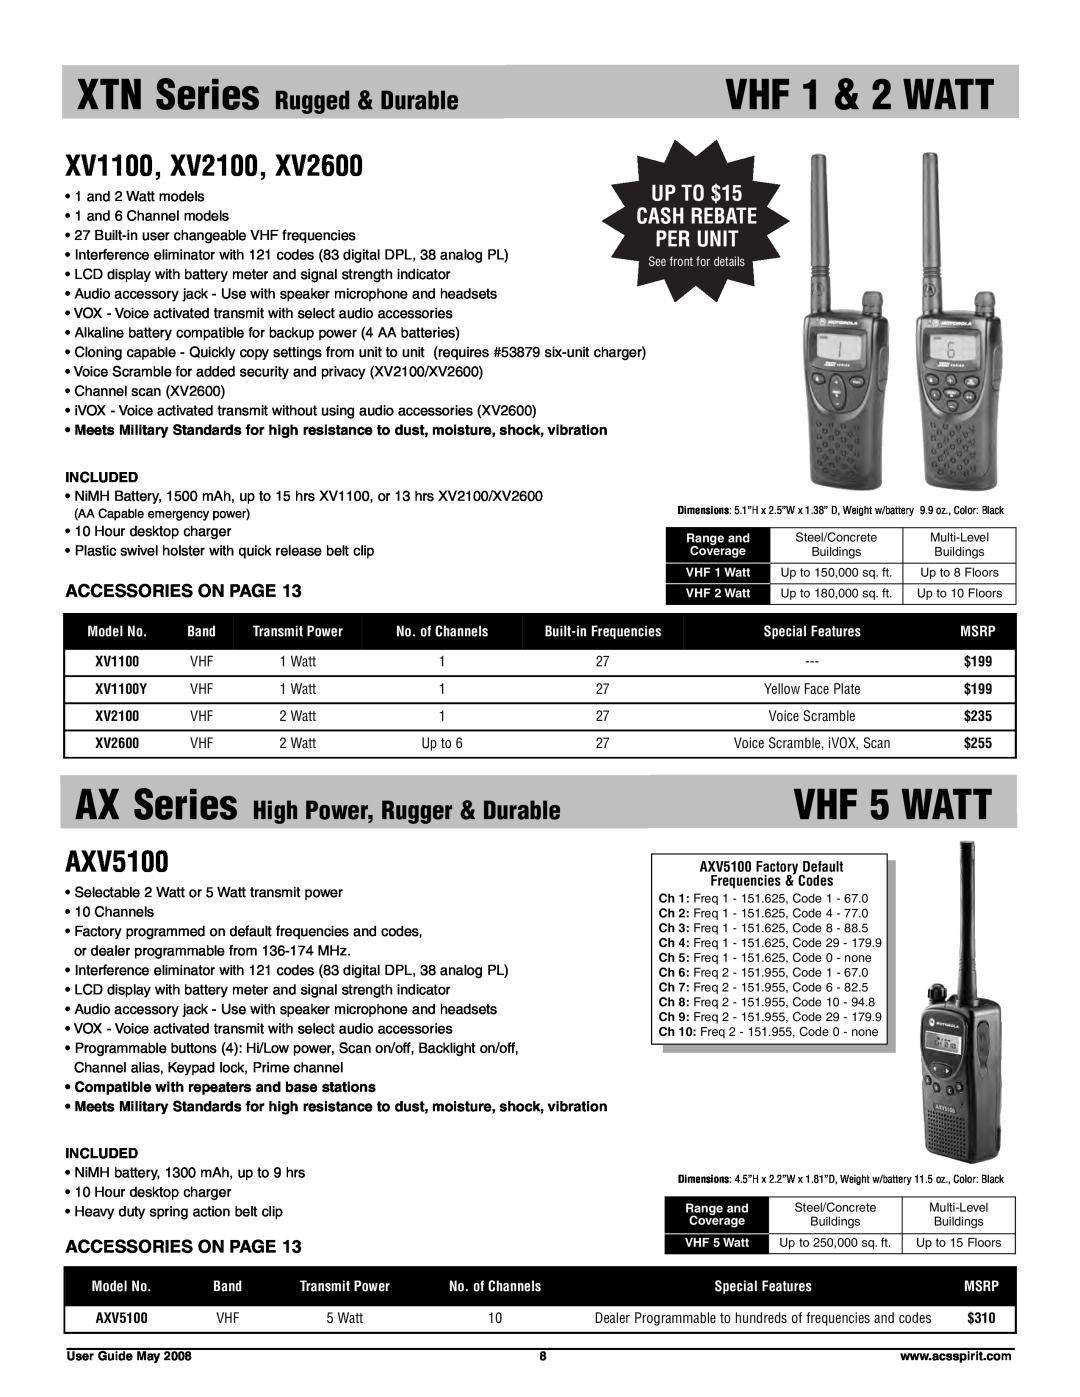 Motorola RDV5100 XV1100, XV2100, AXV5100, XTN Series Rugged & Durable, AX Series High Power, Rugger & Durable, VHF 5 WATT 